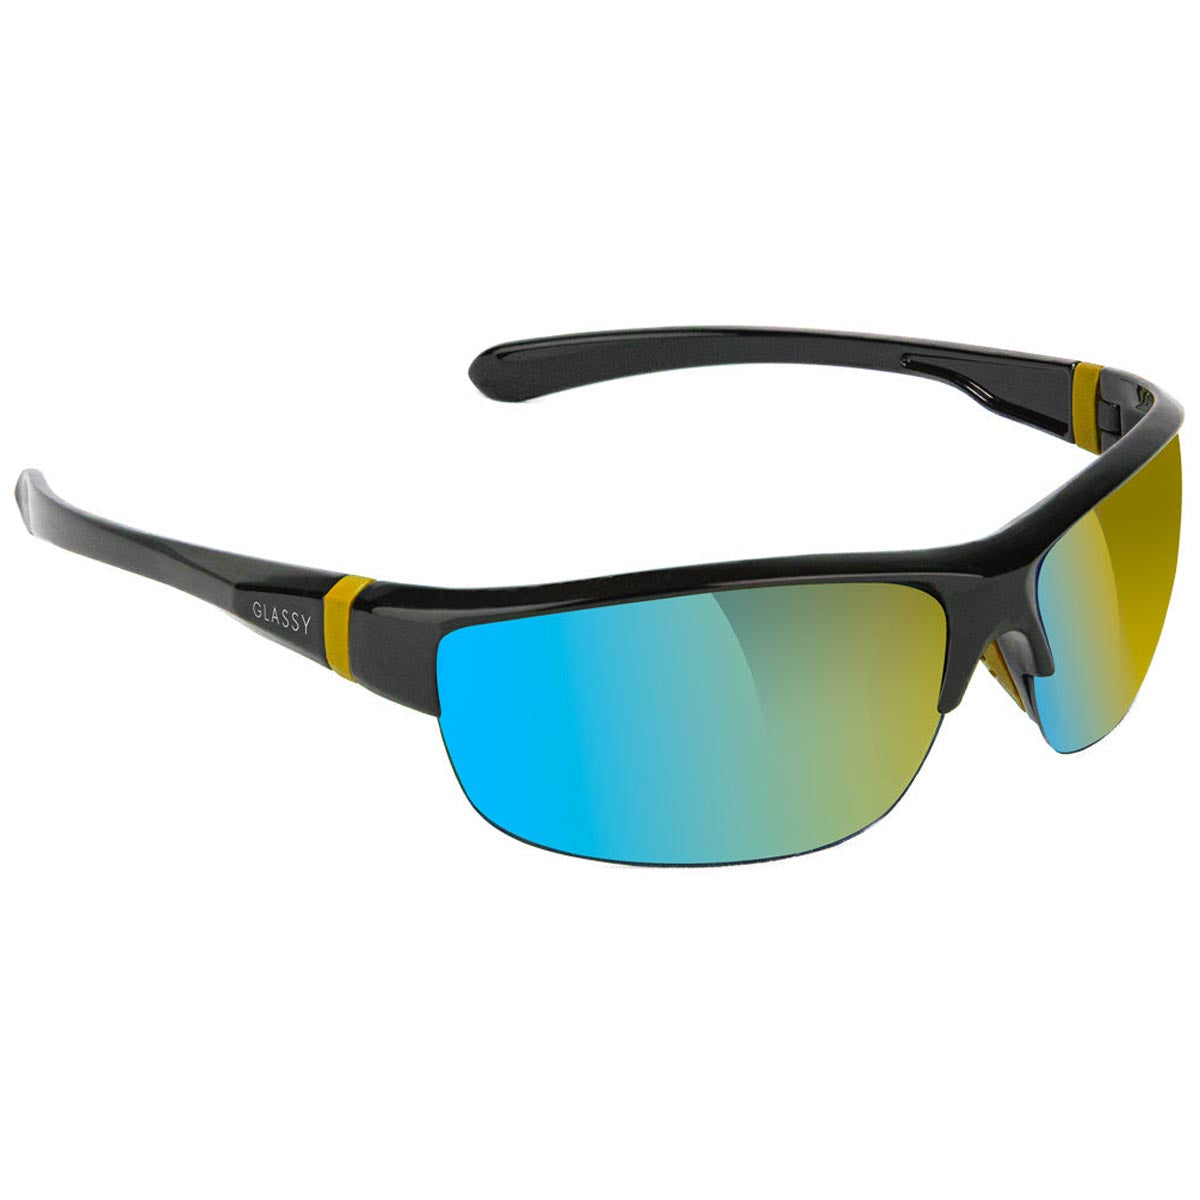 Glassy Weber Plus Polarized Sunglasses - Black/Gold Mirror image 1